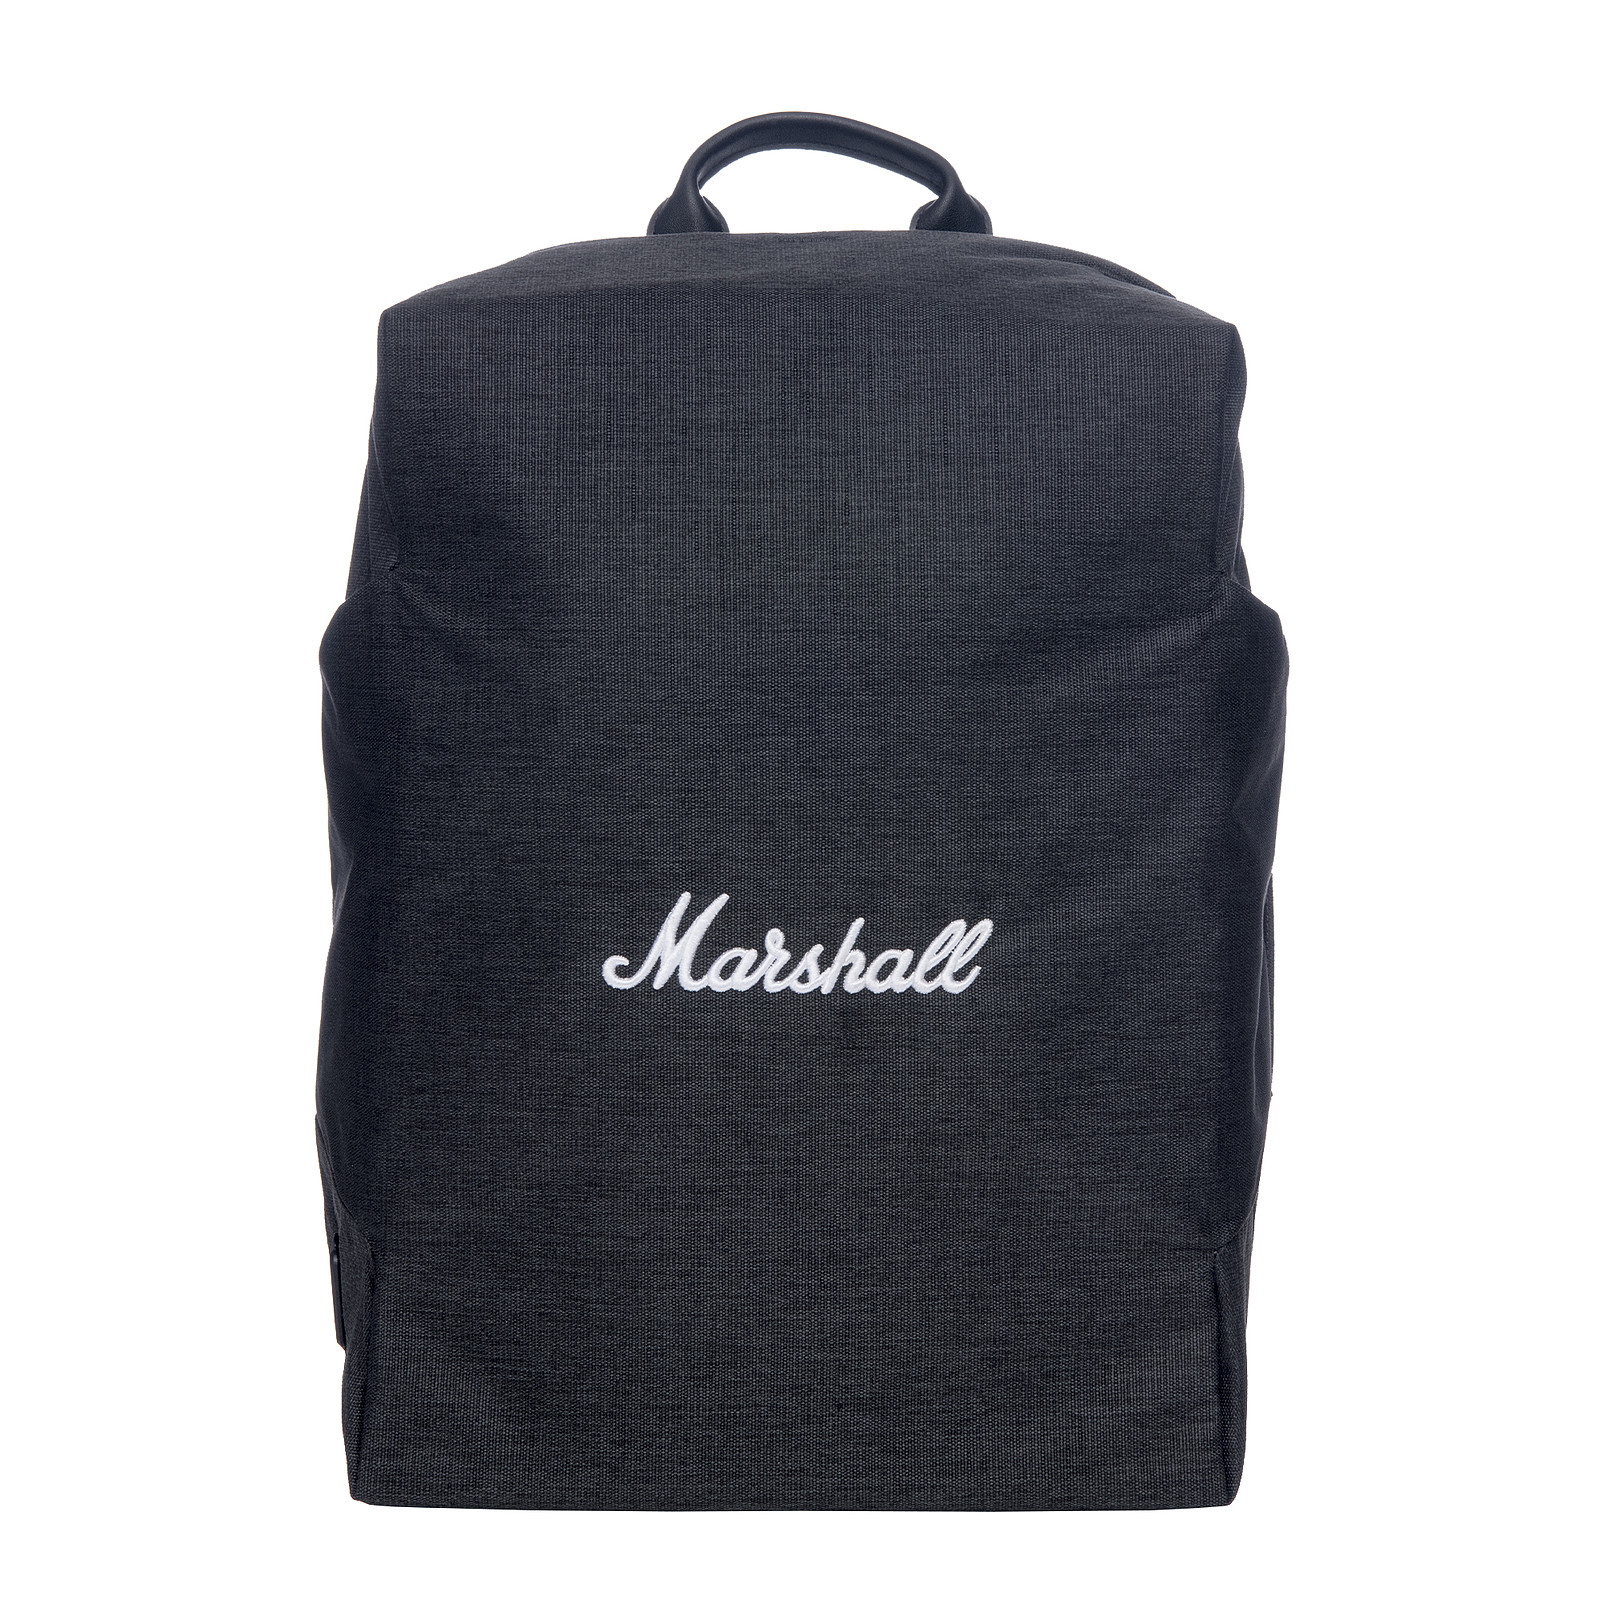 Marshall - Sac a  dos City Rocker urban style 17L noir logo blanc - Sac, sacoche, housse MARSHALL